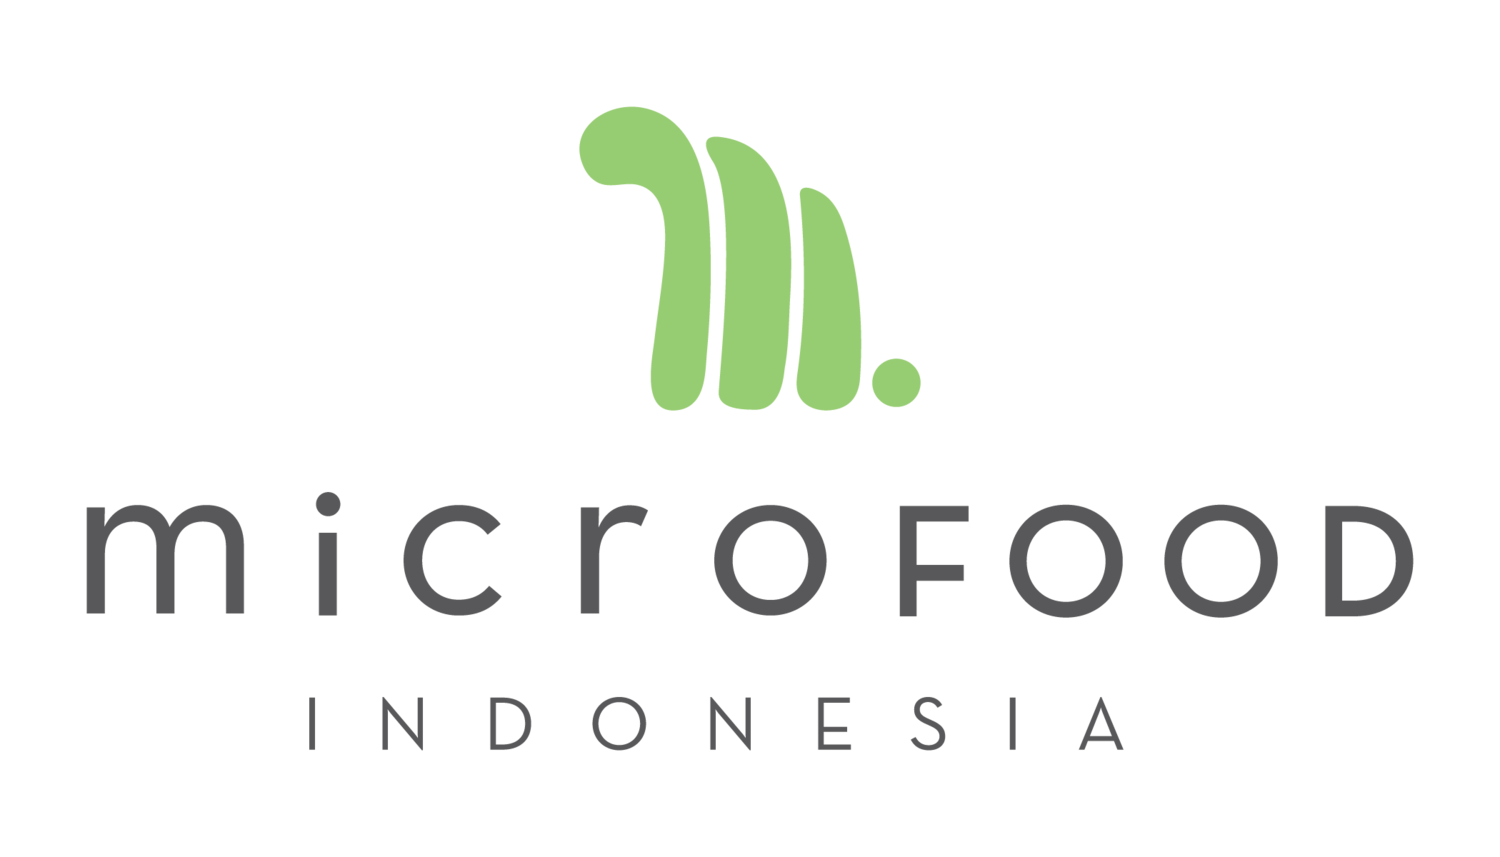 Microfood Indonesia